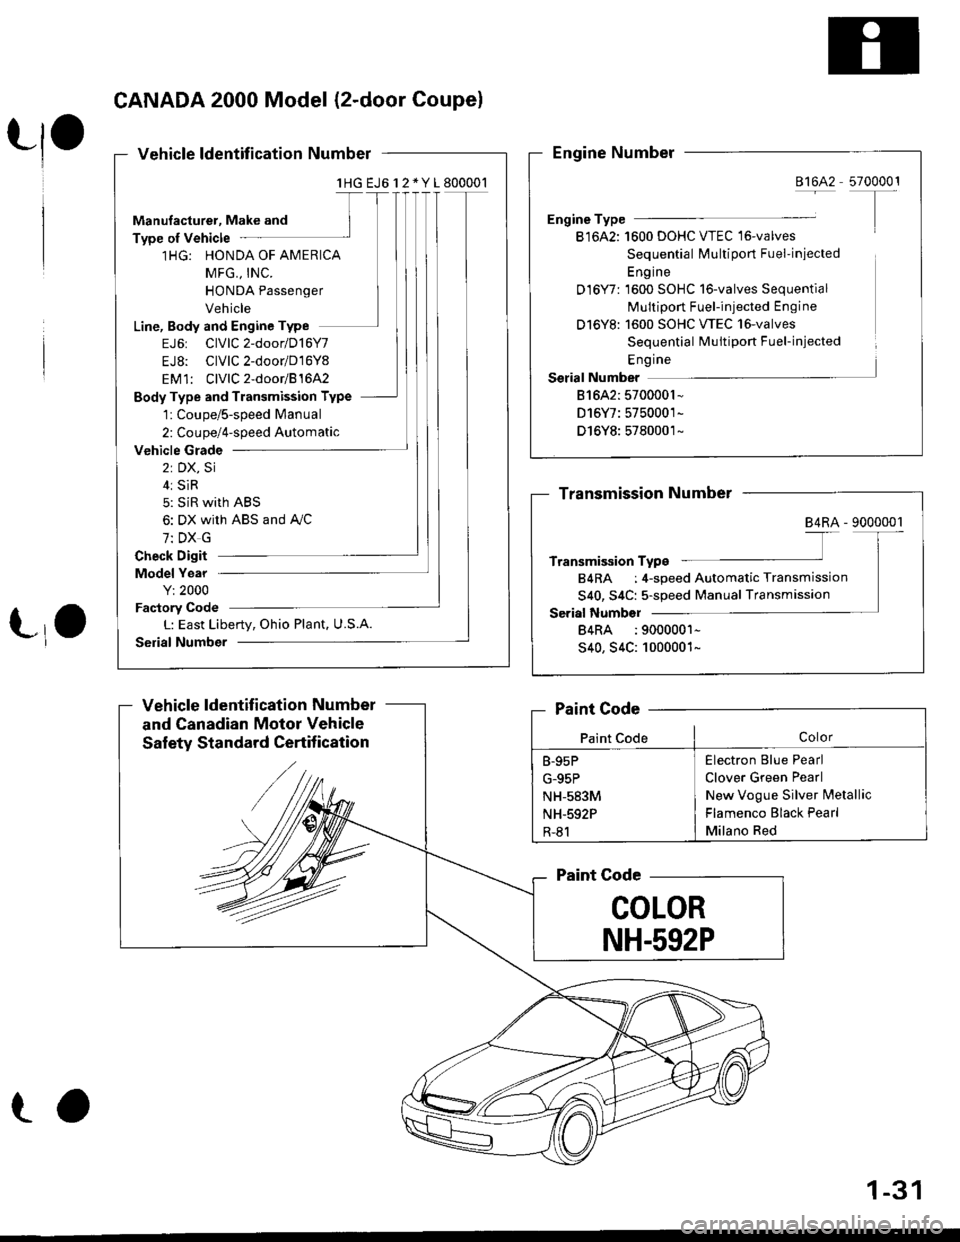 HONDA CIVIC 1997 6.G Owners Guide CANADA 2000 Model (2-door Coupel
Vehicle ldentification Number
lHG EJ6l 2 * Y 1800001
Manufacturer, Make and
Type of Vehicle
1HG: HONDA OF AMERICA
MFG,, INC.
HONDA Passenger
Vehicle
Line, Body and En